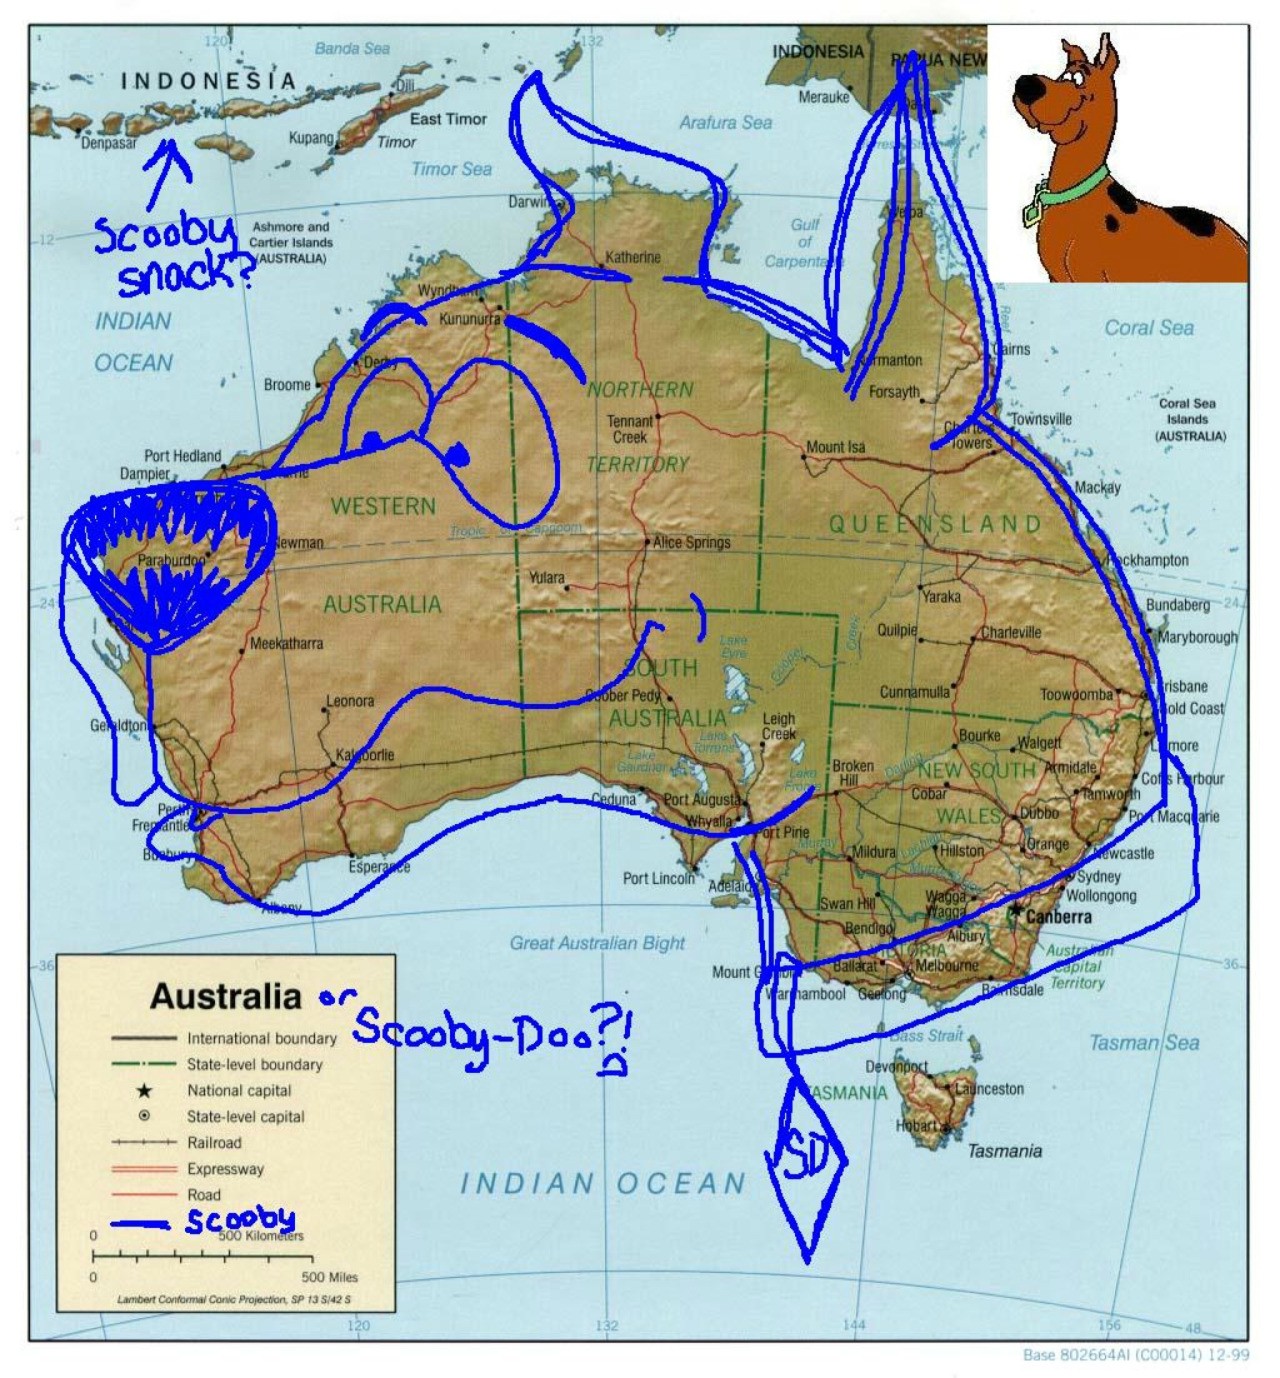 random pic scooby australia - Indonesia Scooby shock? Indian Ocean Daten Terata Western Queensland Australia Australia or ScoobyDoo? Indian Ocean Scooby